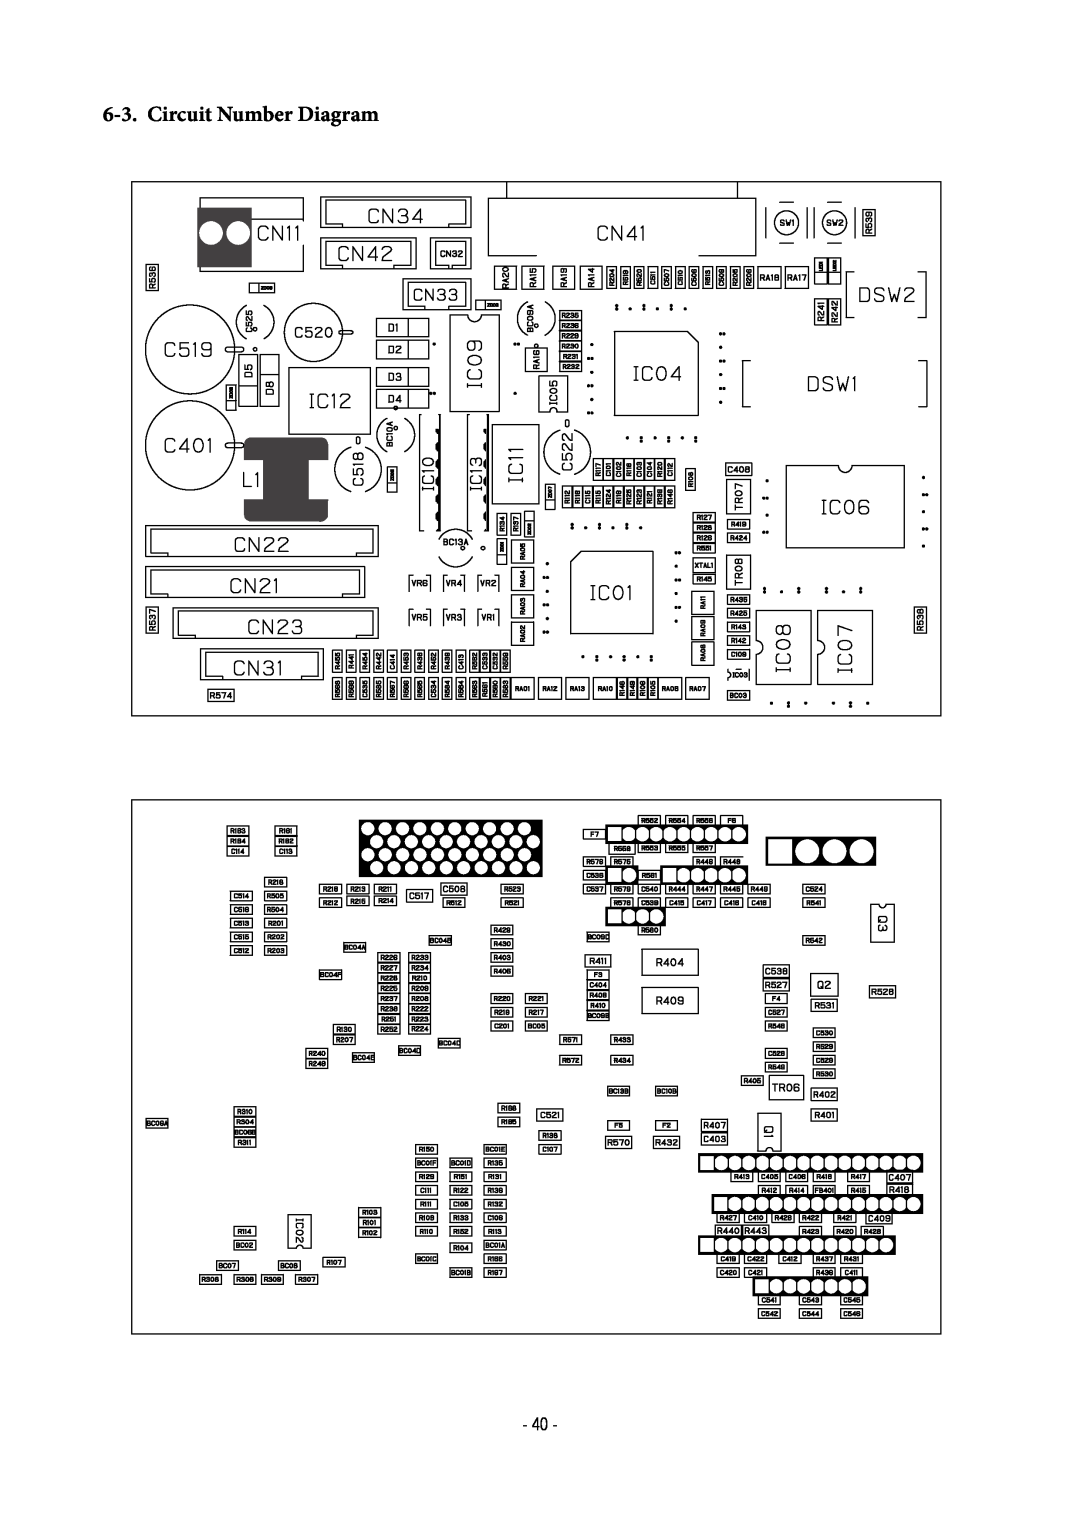 Star Micronics TUP500 technical manual Circuit Number Diagram 